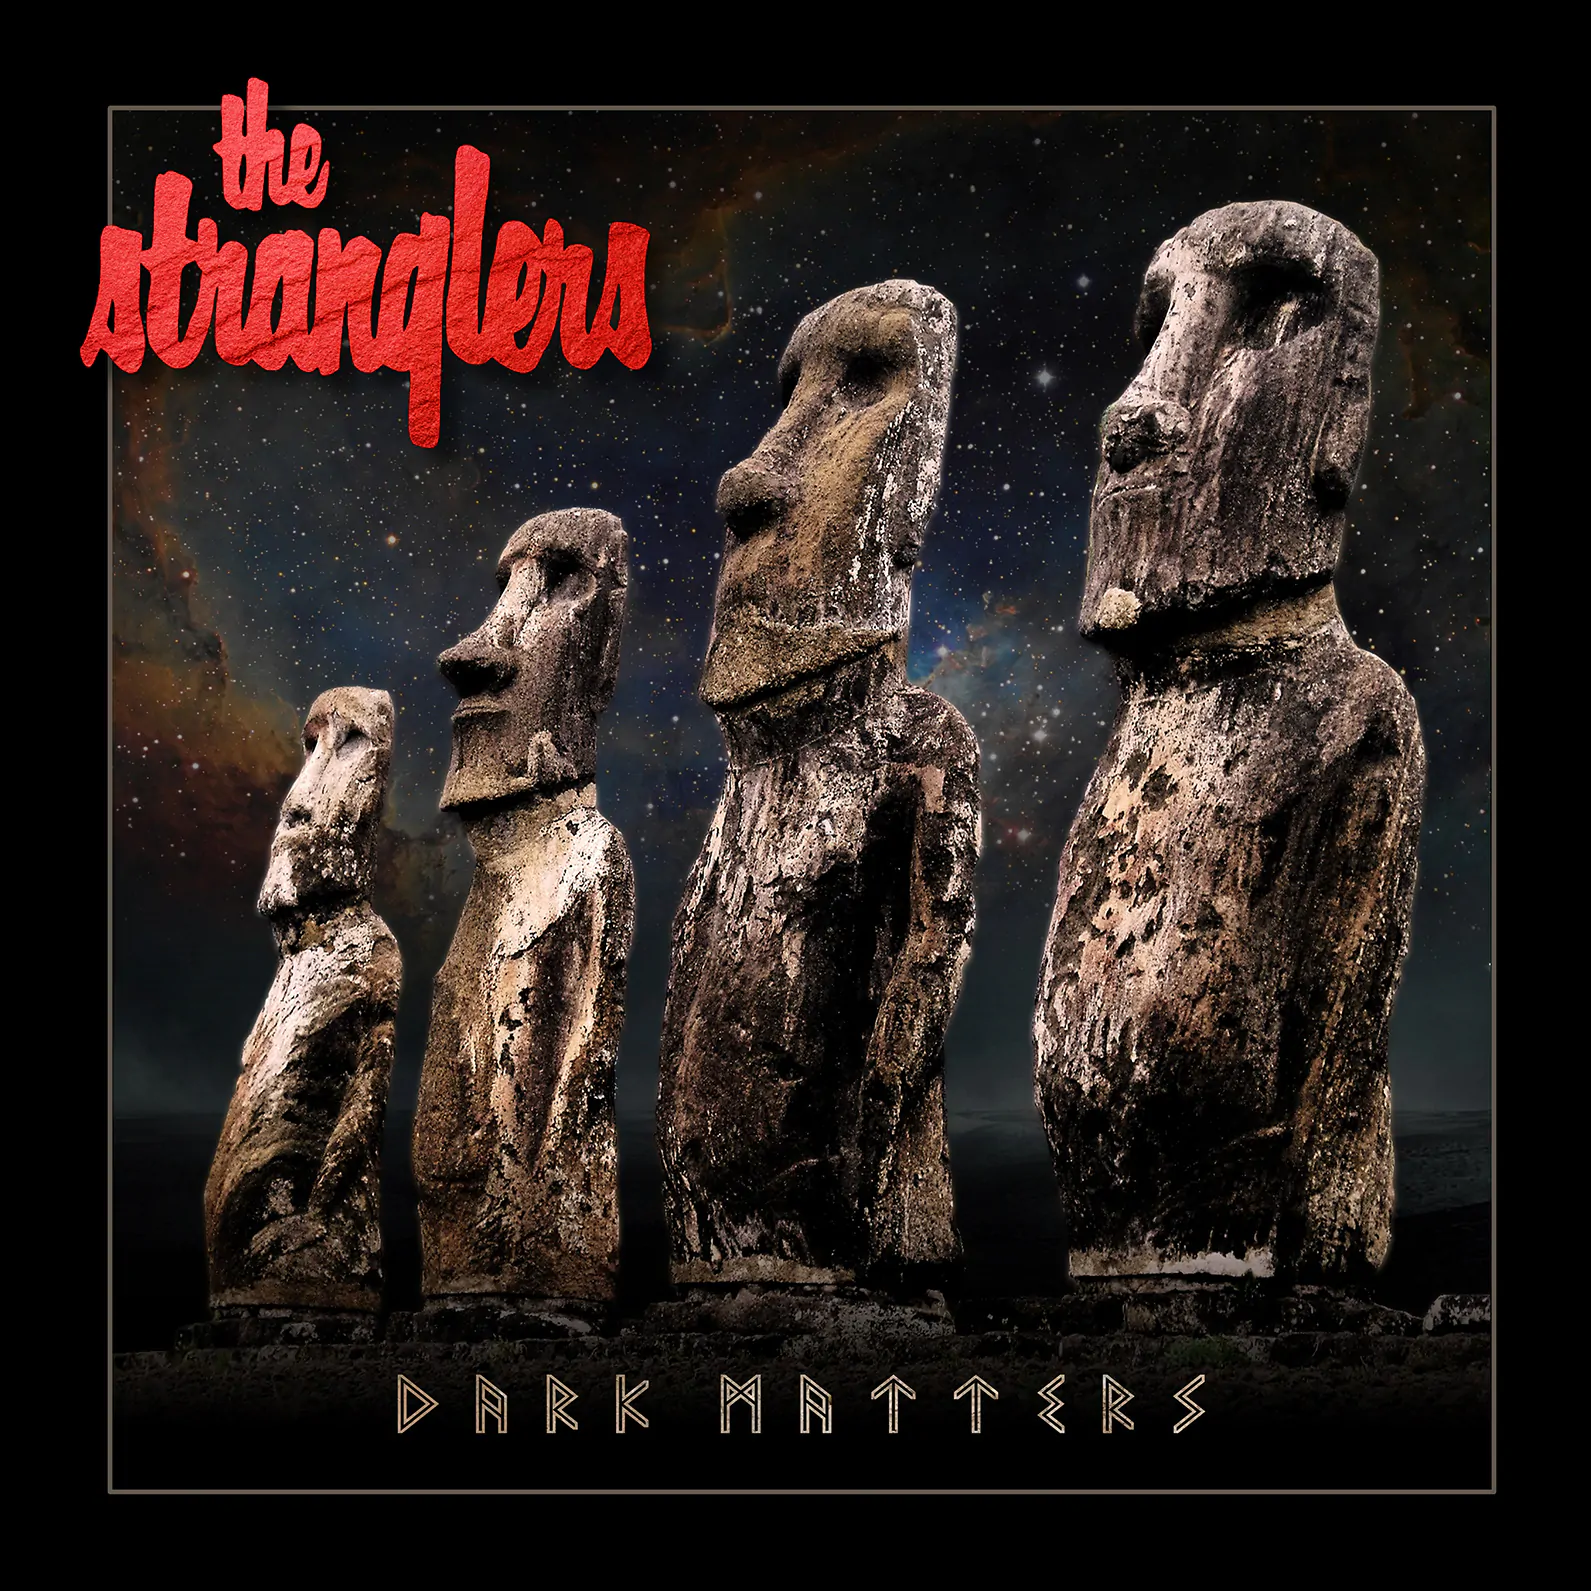 THE STRANGLERS announce new album ‘Dark Matters’ due for release on 10th September 2021